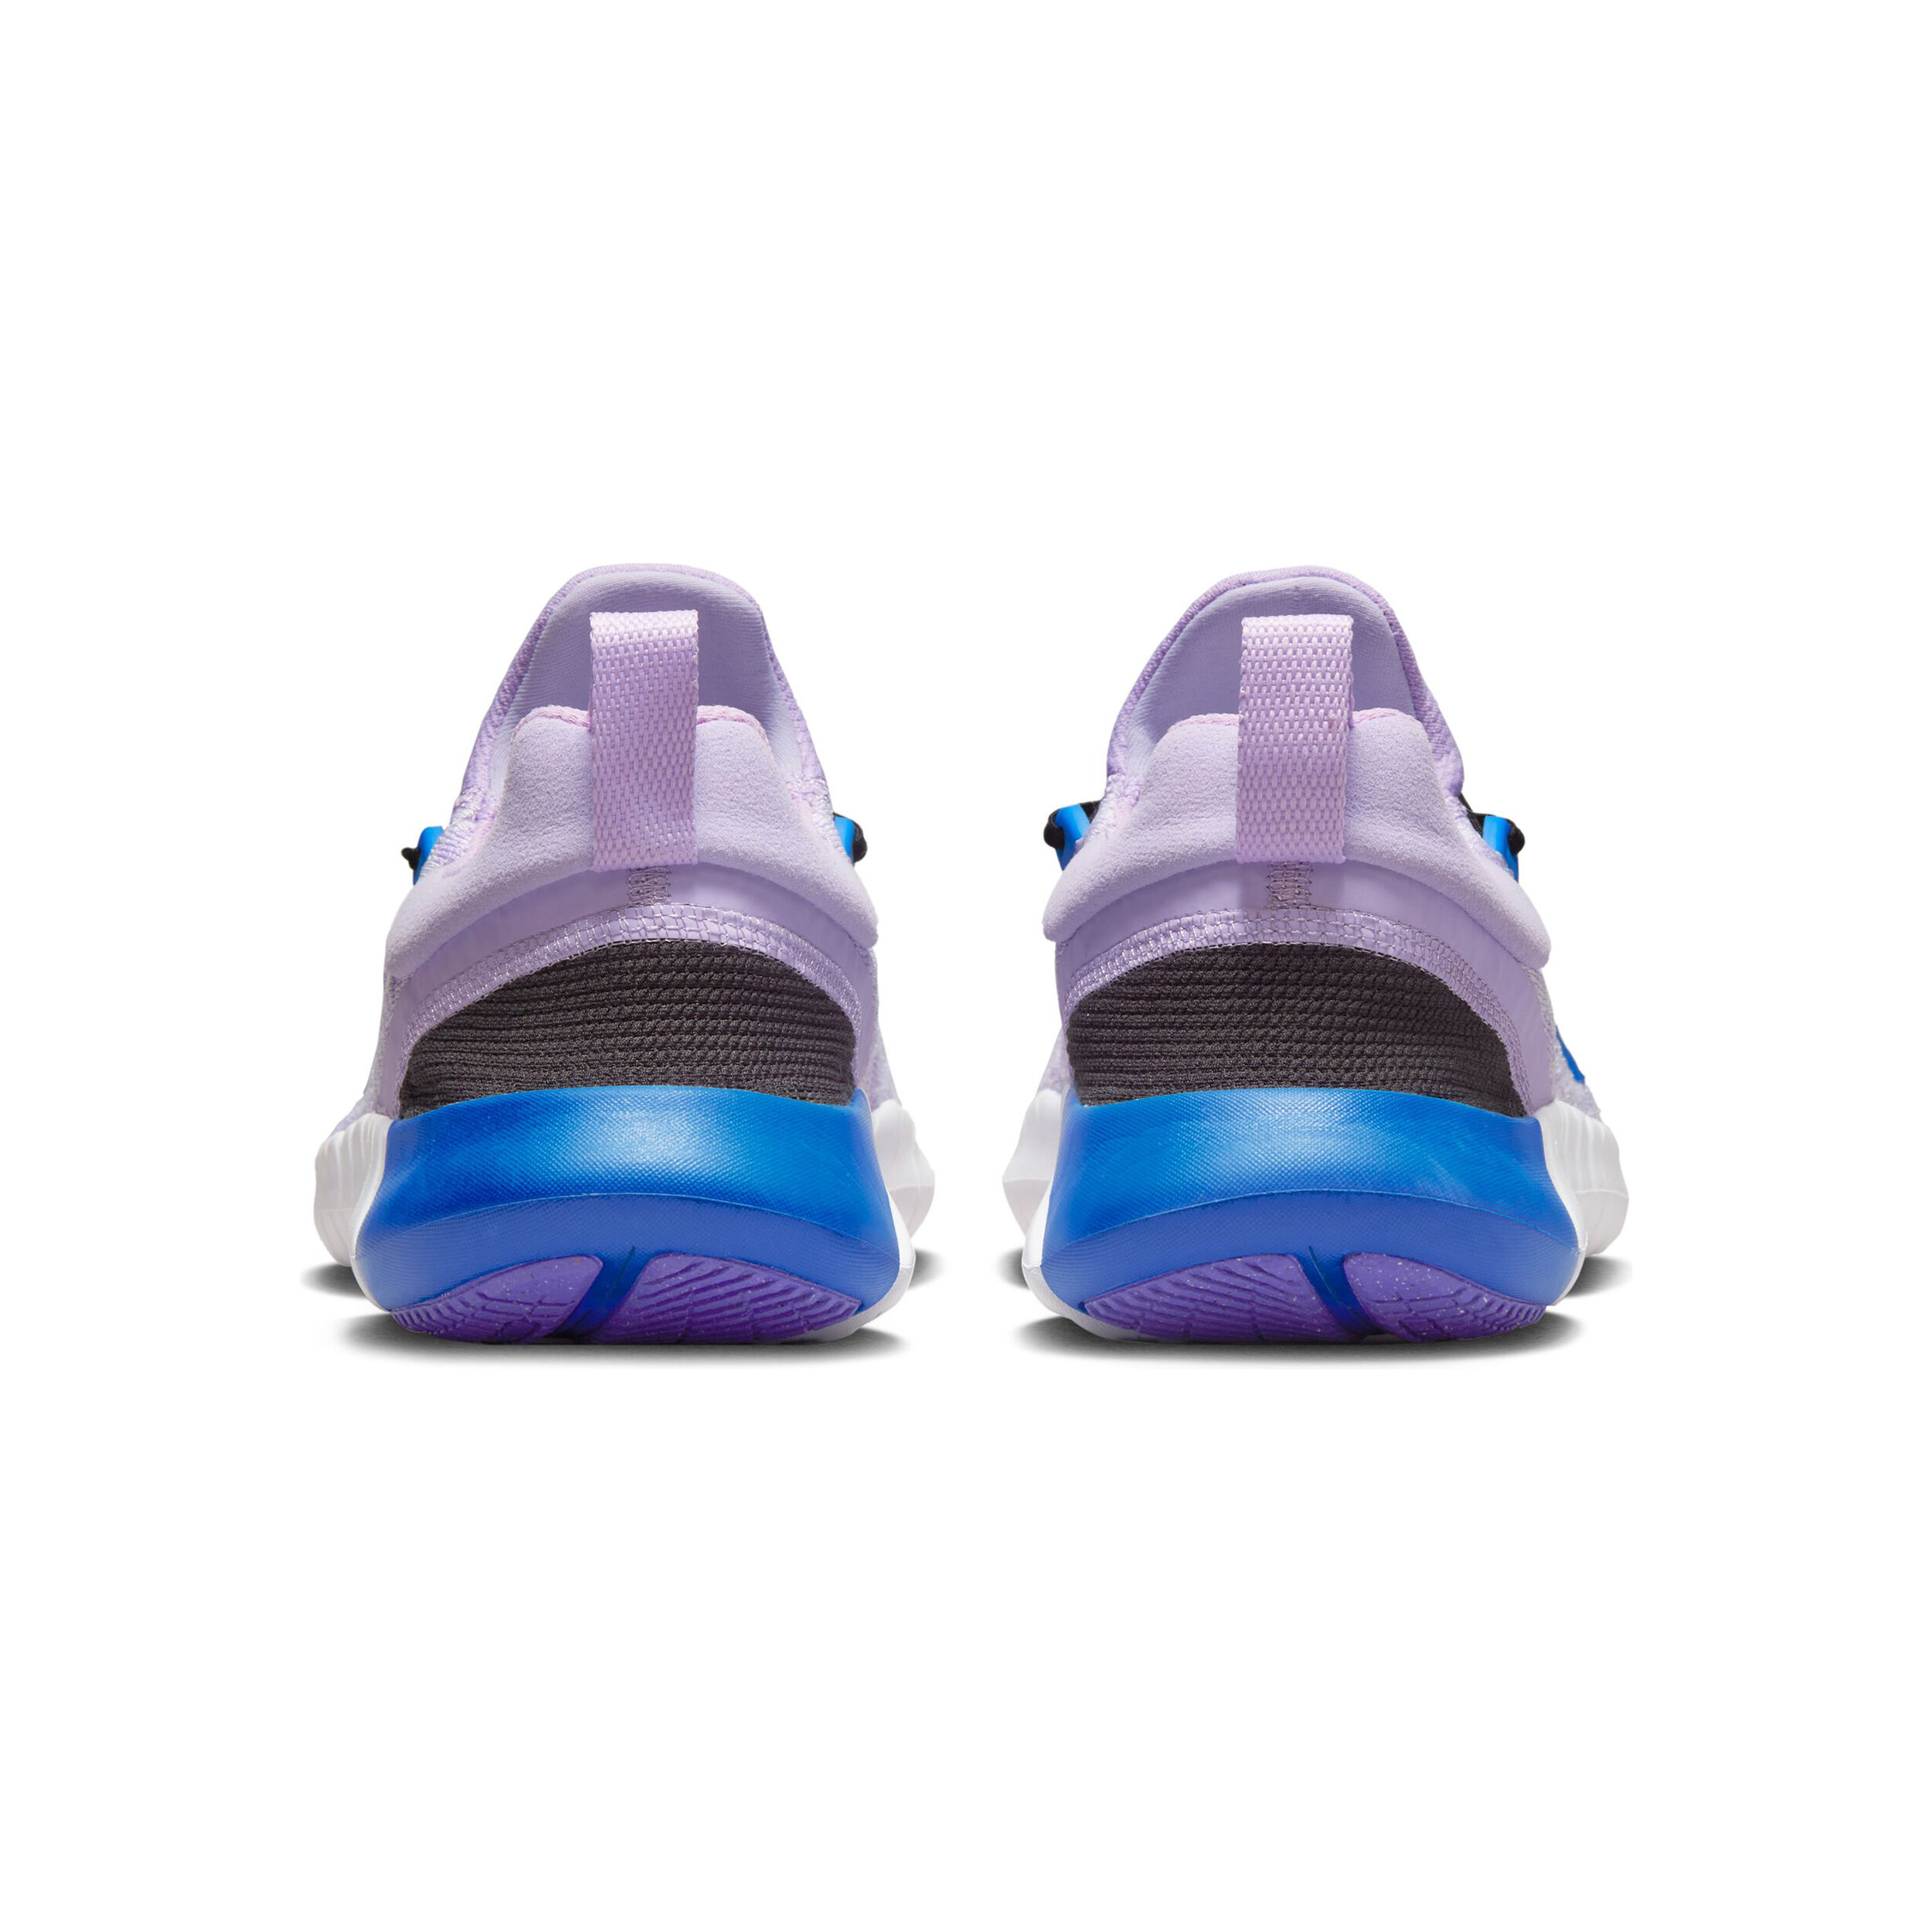 Buy Nike Free Run 5.0 Neutral Running Shoe Women Violet, Blue